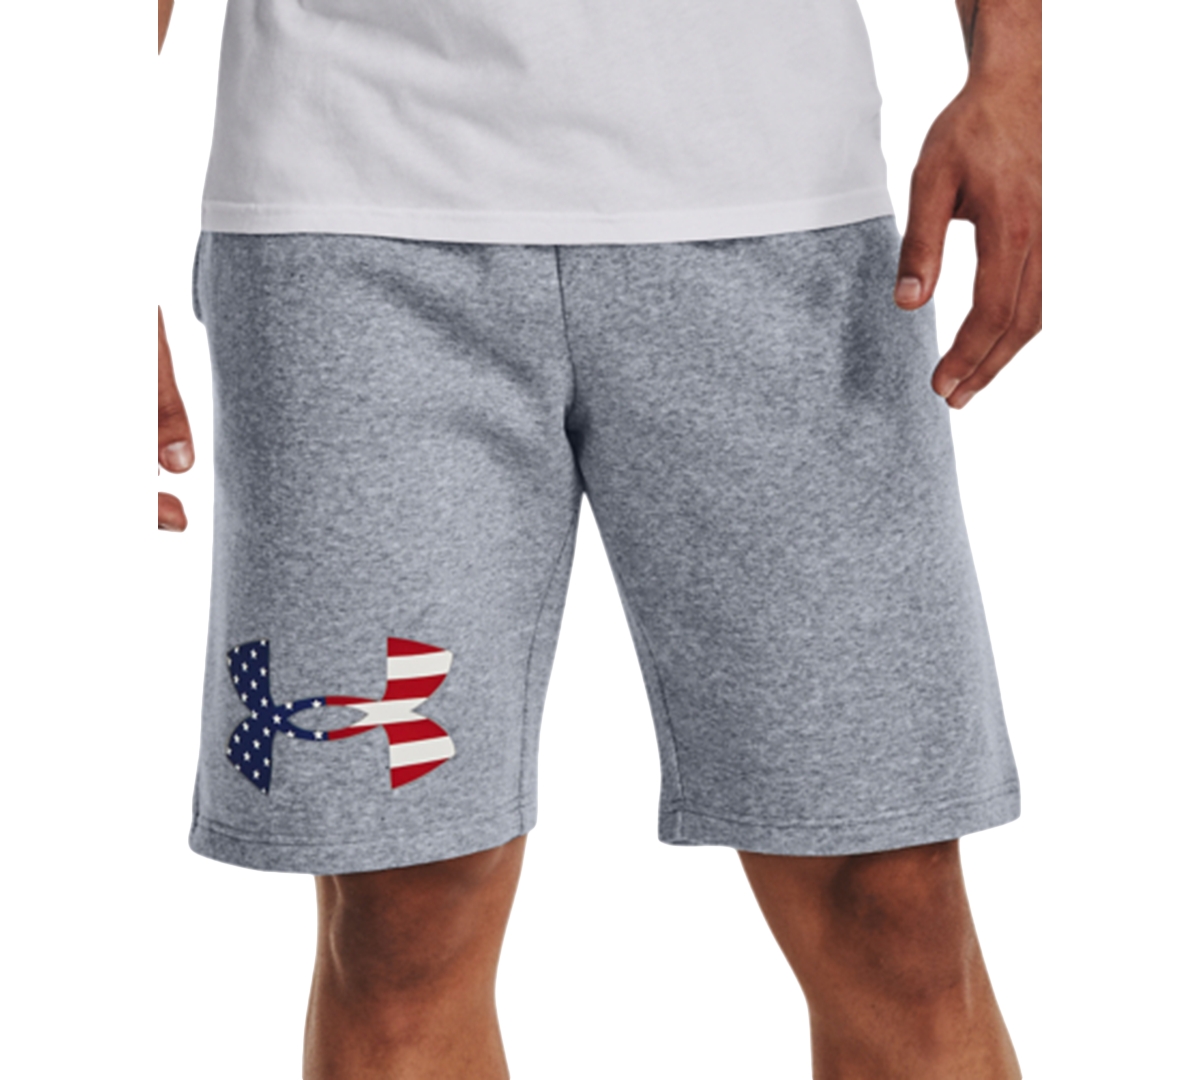 Men's Freedom Rival 10" Shorts - Steel/white